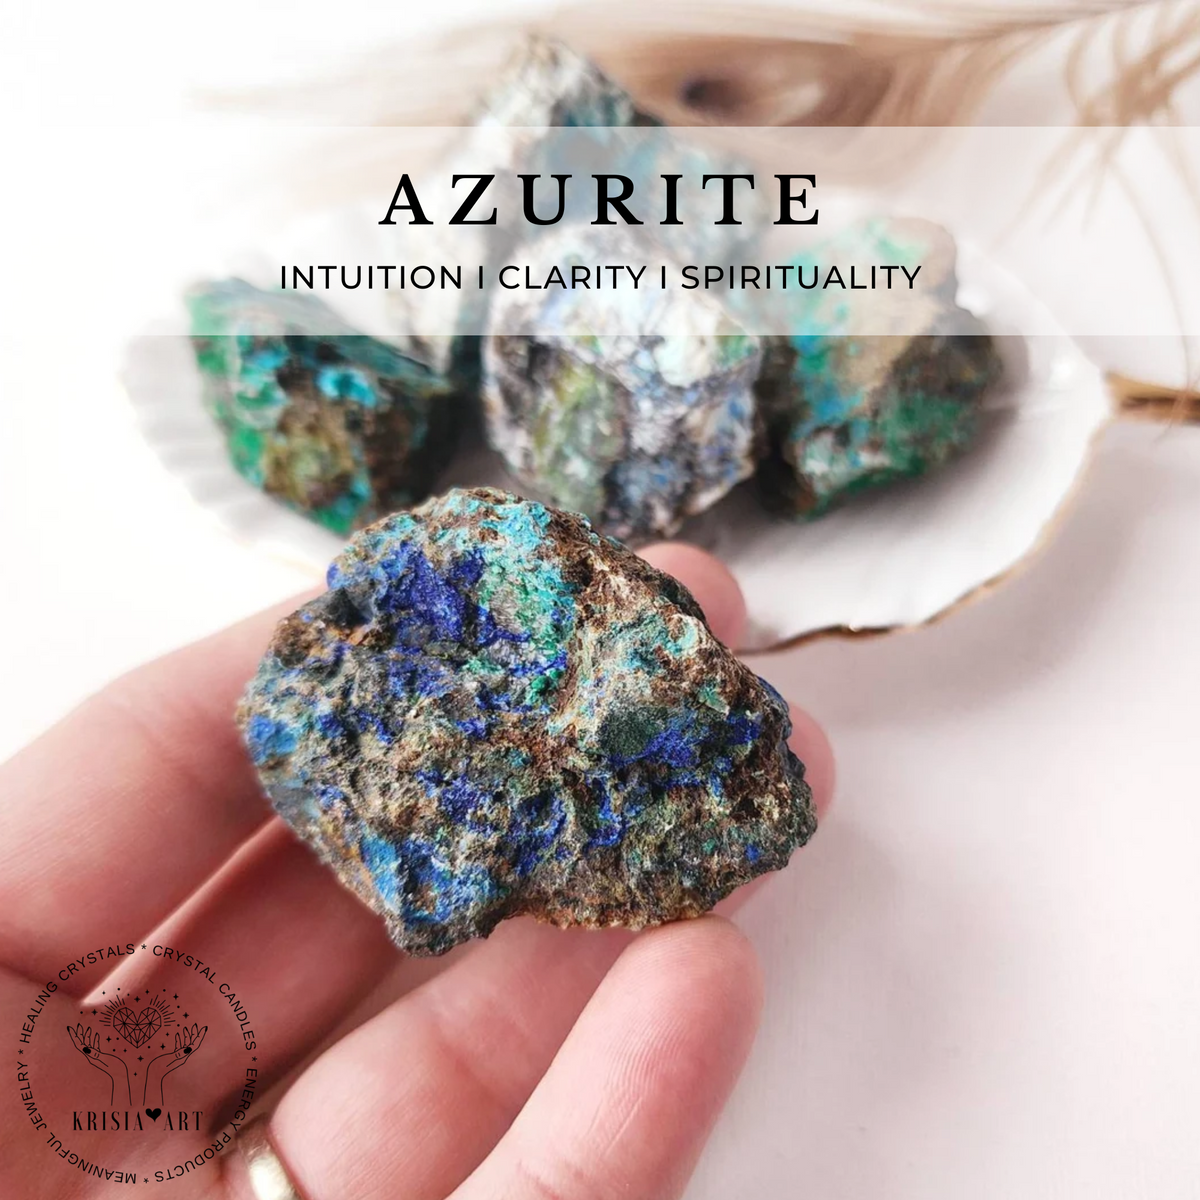 AZURITE raw crystal for intuition, clarity, spirituality reiki healing third eye chakra meditation